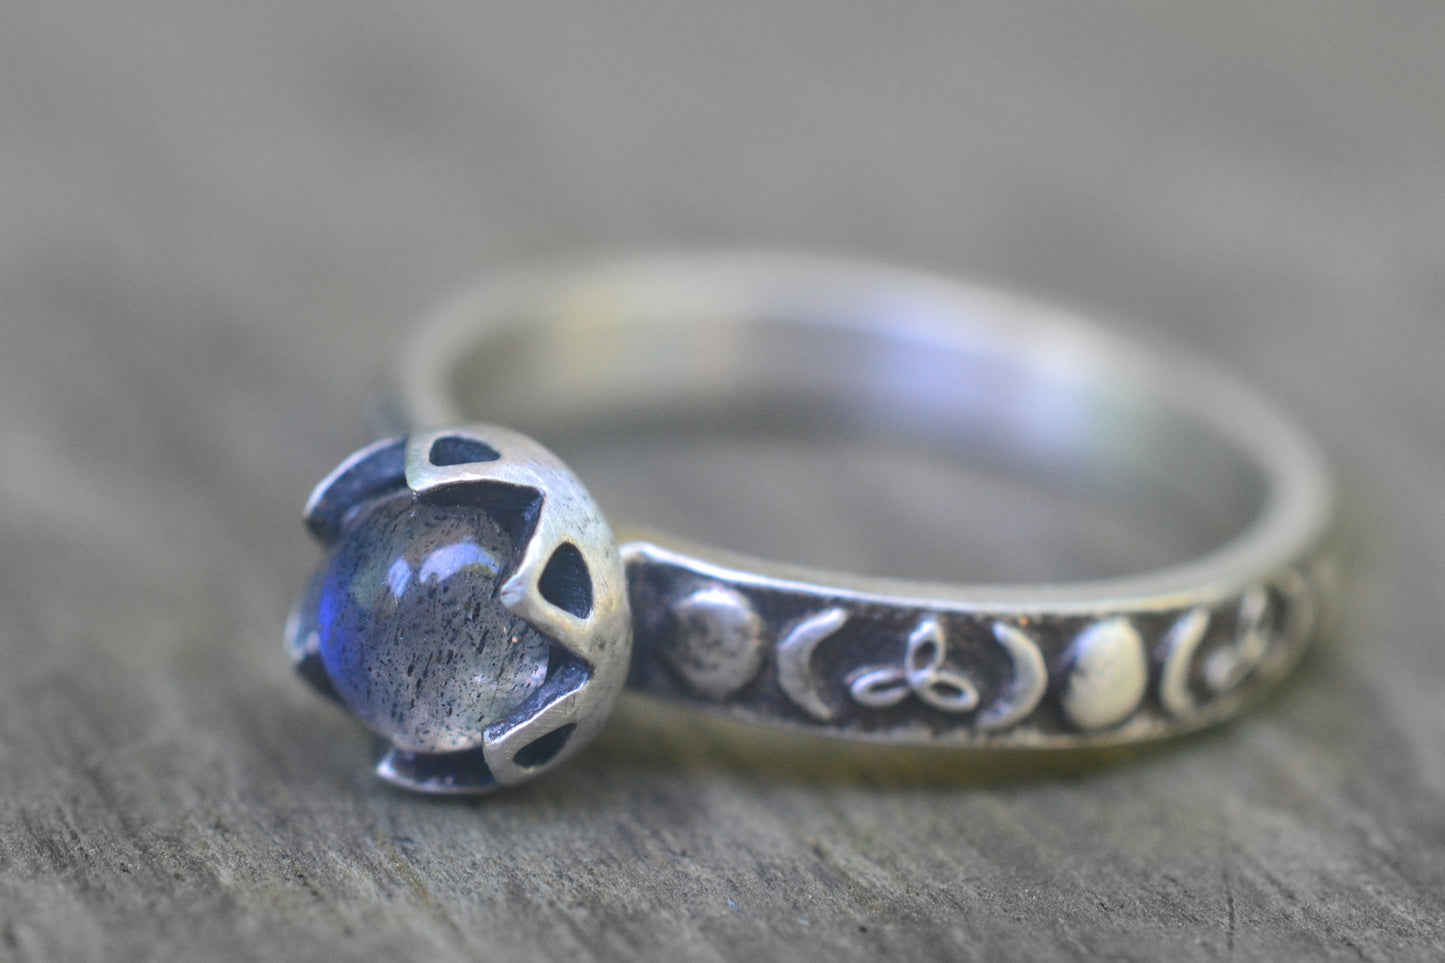 5mm Labradorite Moon Goddess Ring in Silver 